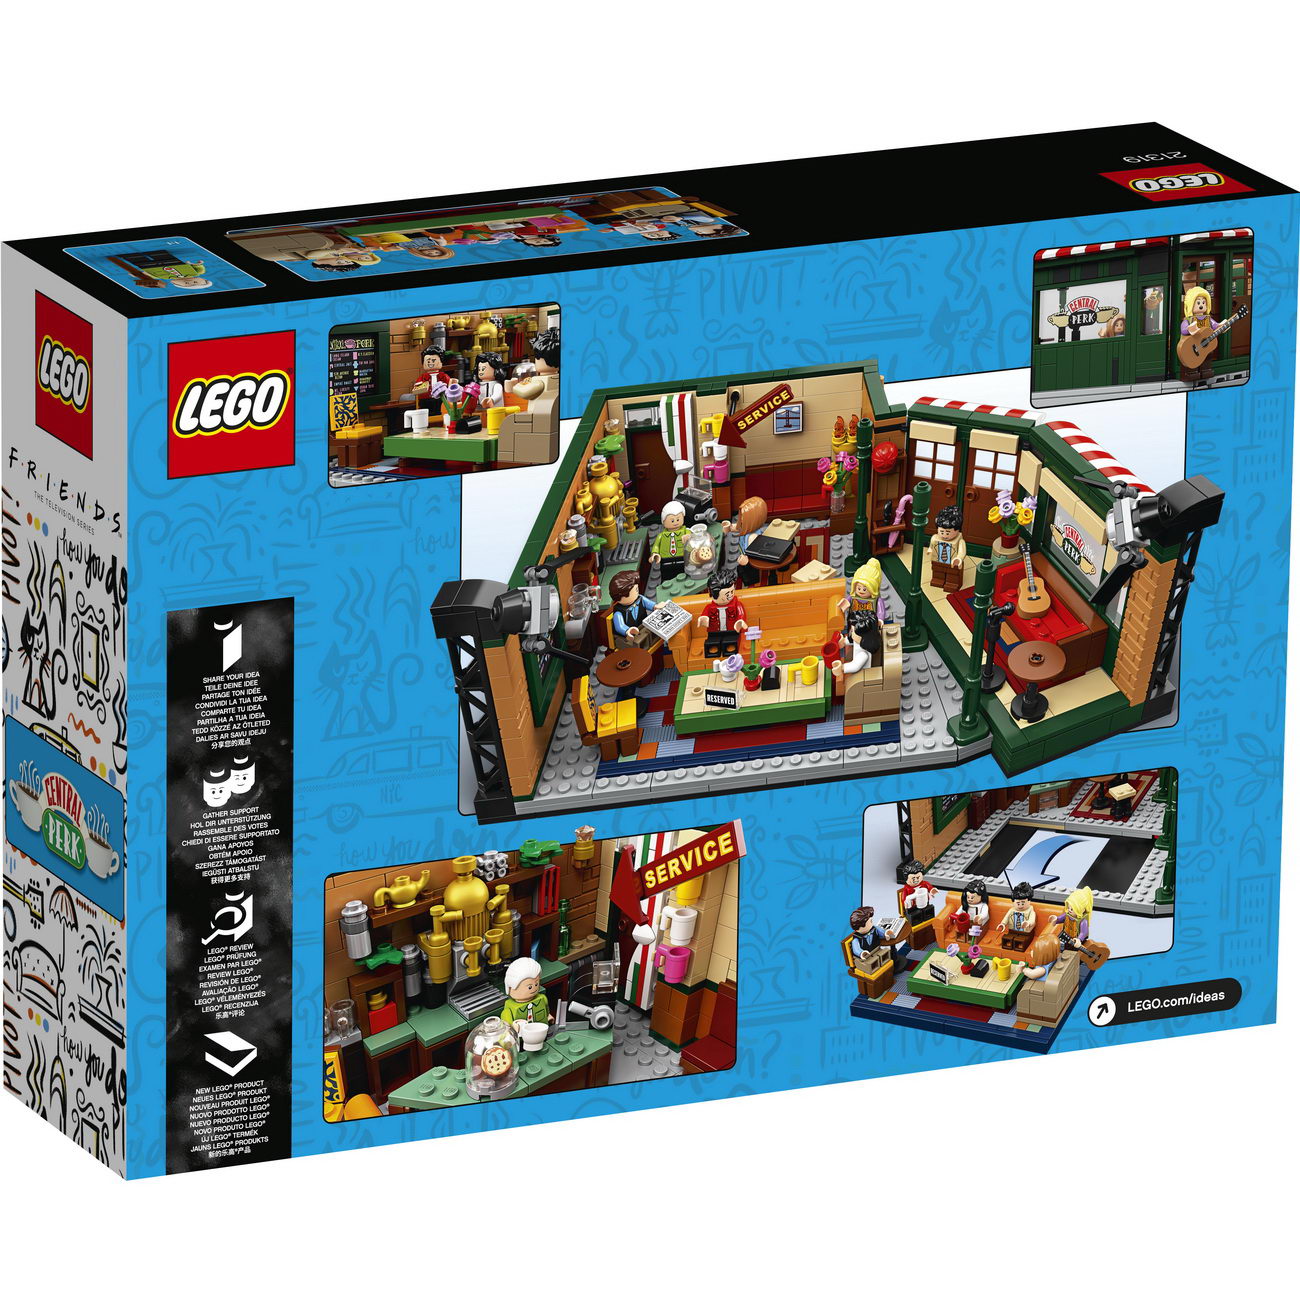 LEGO 21319 - Friends Central Perk